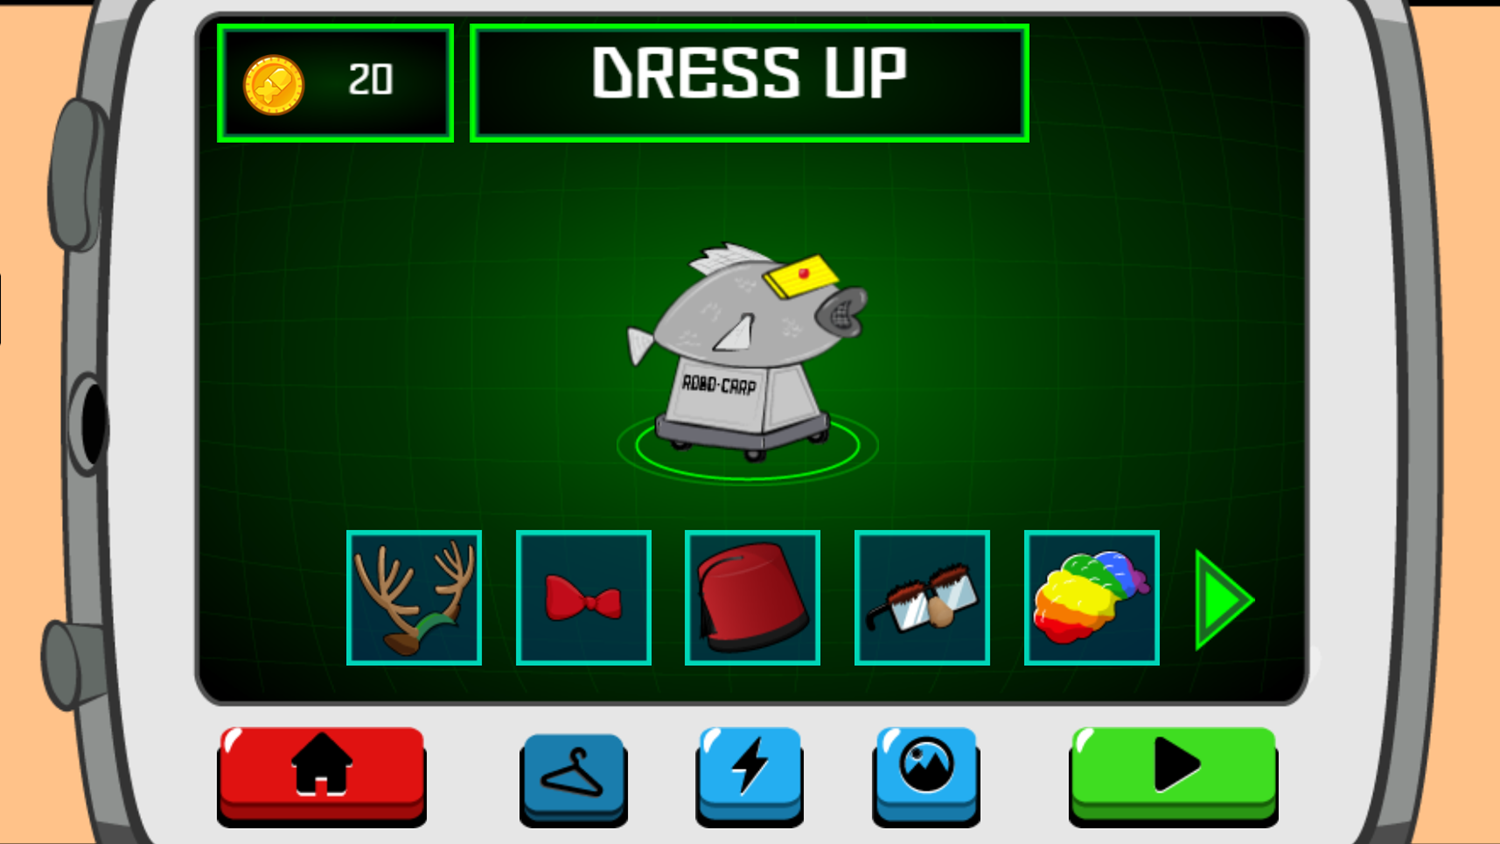 Robo-Carpe Diem Game Dress Up Screenshot.